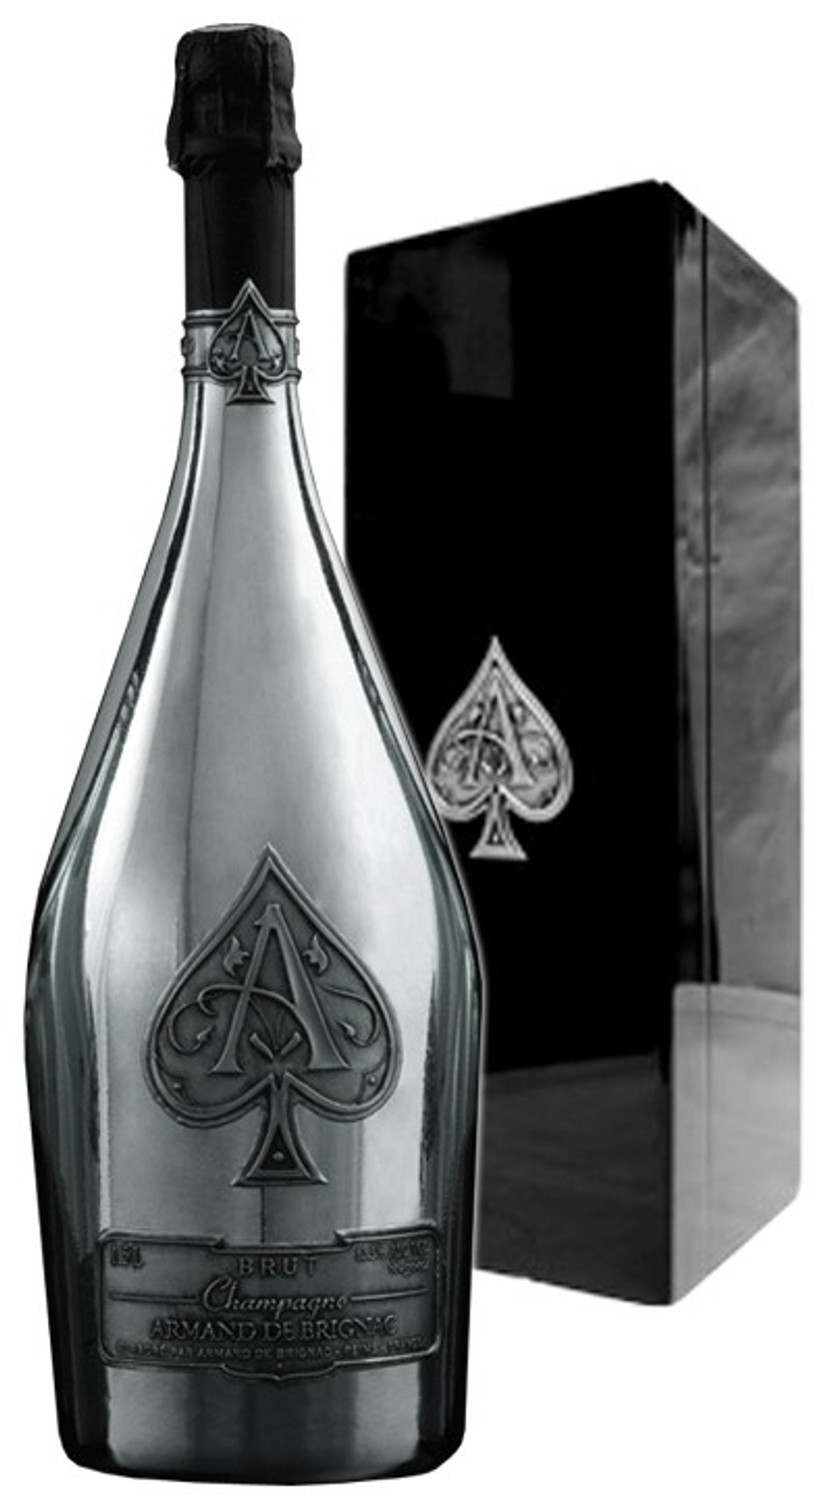 Armand de Brignac Rose Champagne Gift Box, 75 cl 